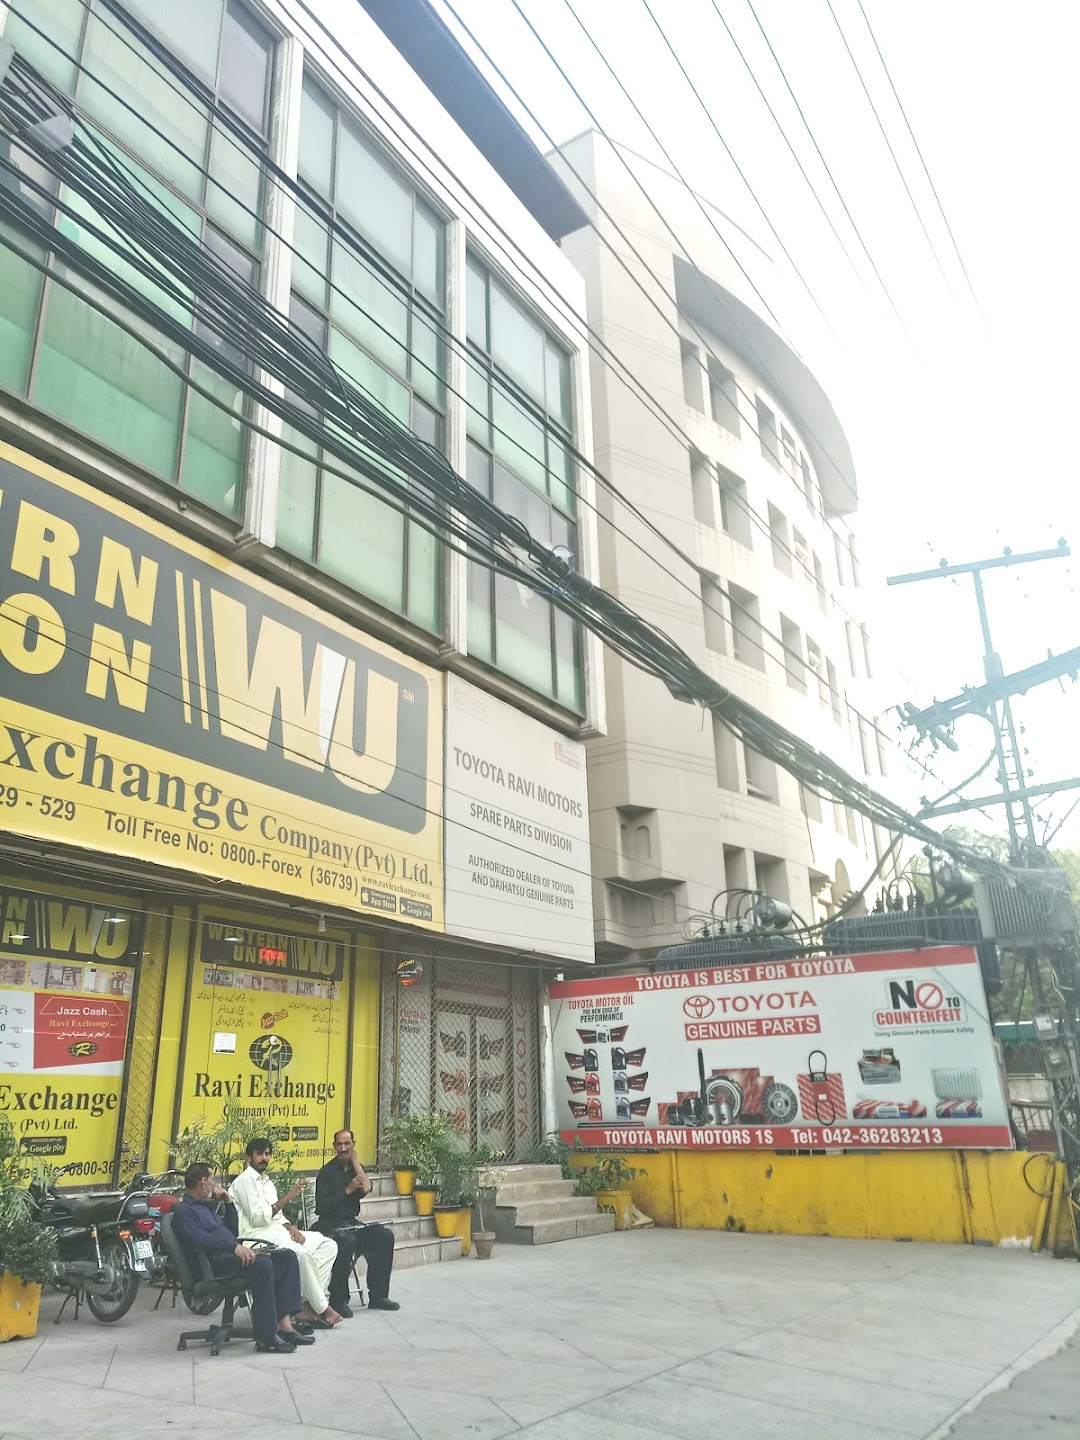 Ravi Exchange Co Western Union